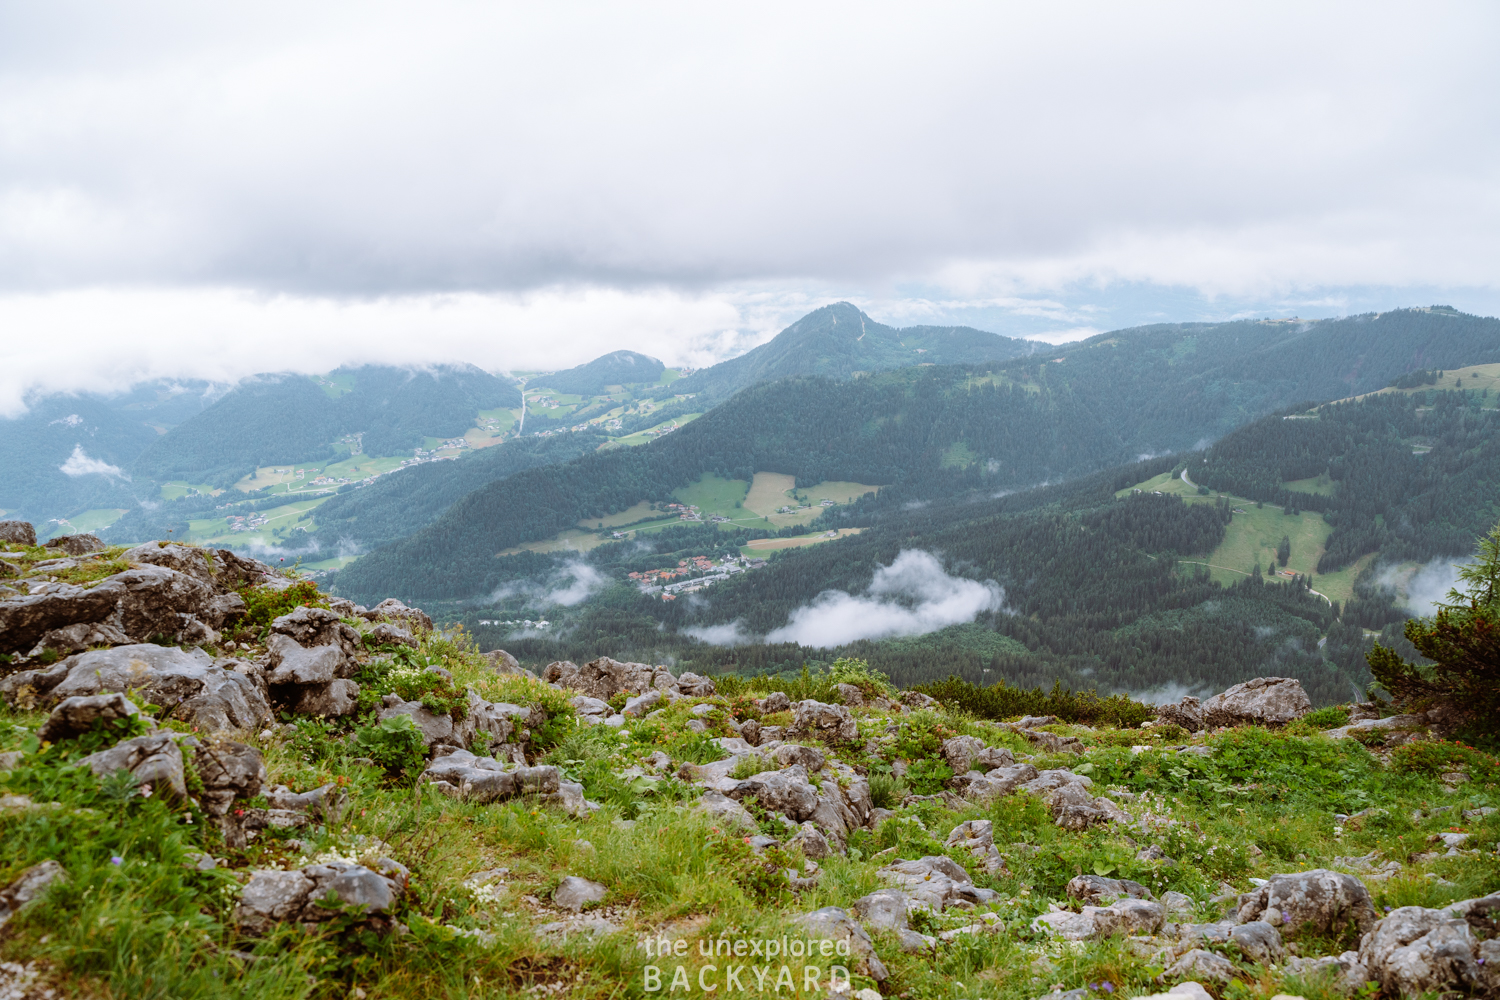 bavarian alps